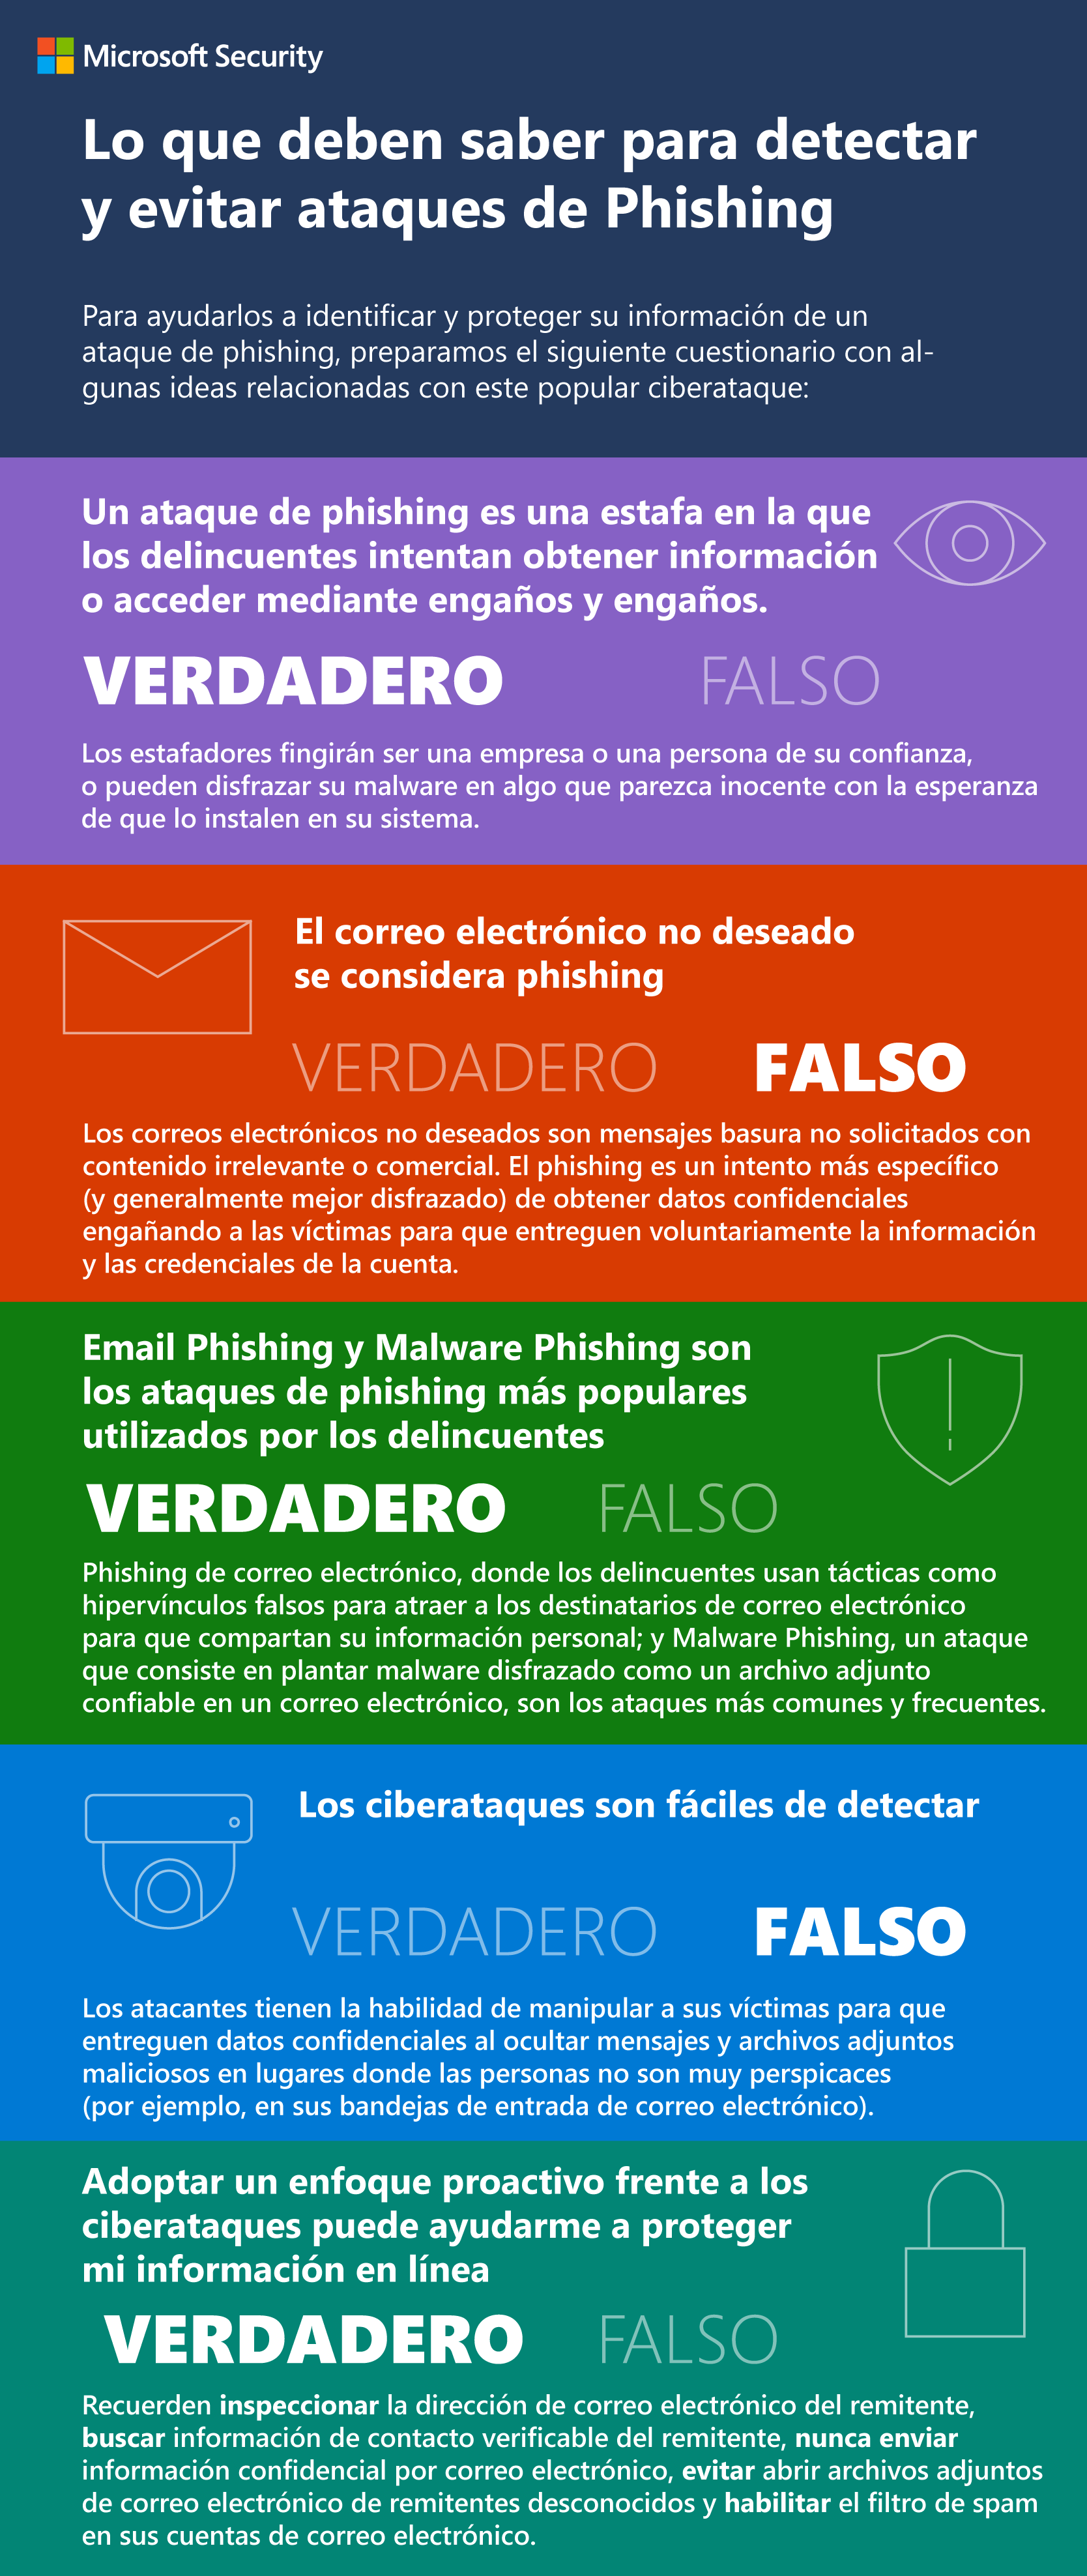 Verdadero o falso: ¿Cuánto saben en realidad sobre los ataques de phishing?